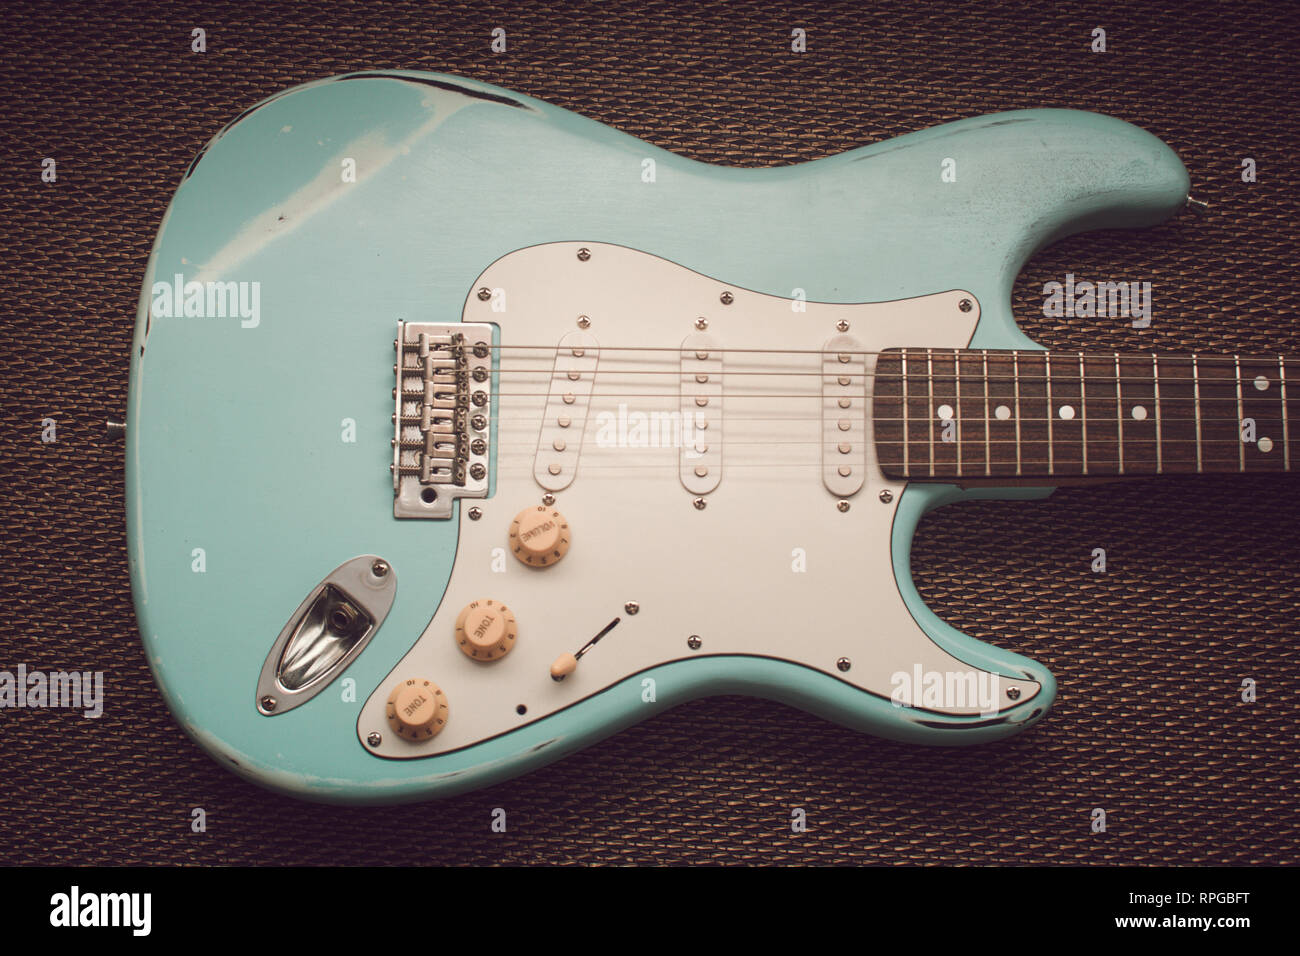 Guitarra eléctrica azul fotografías e imágenes de alta resolución - Alamy